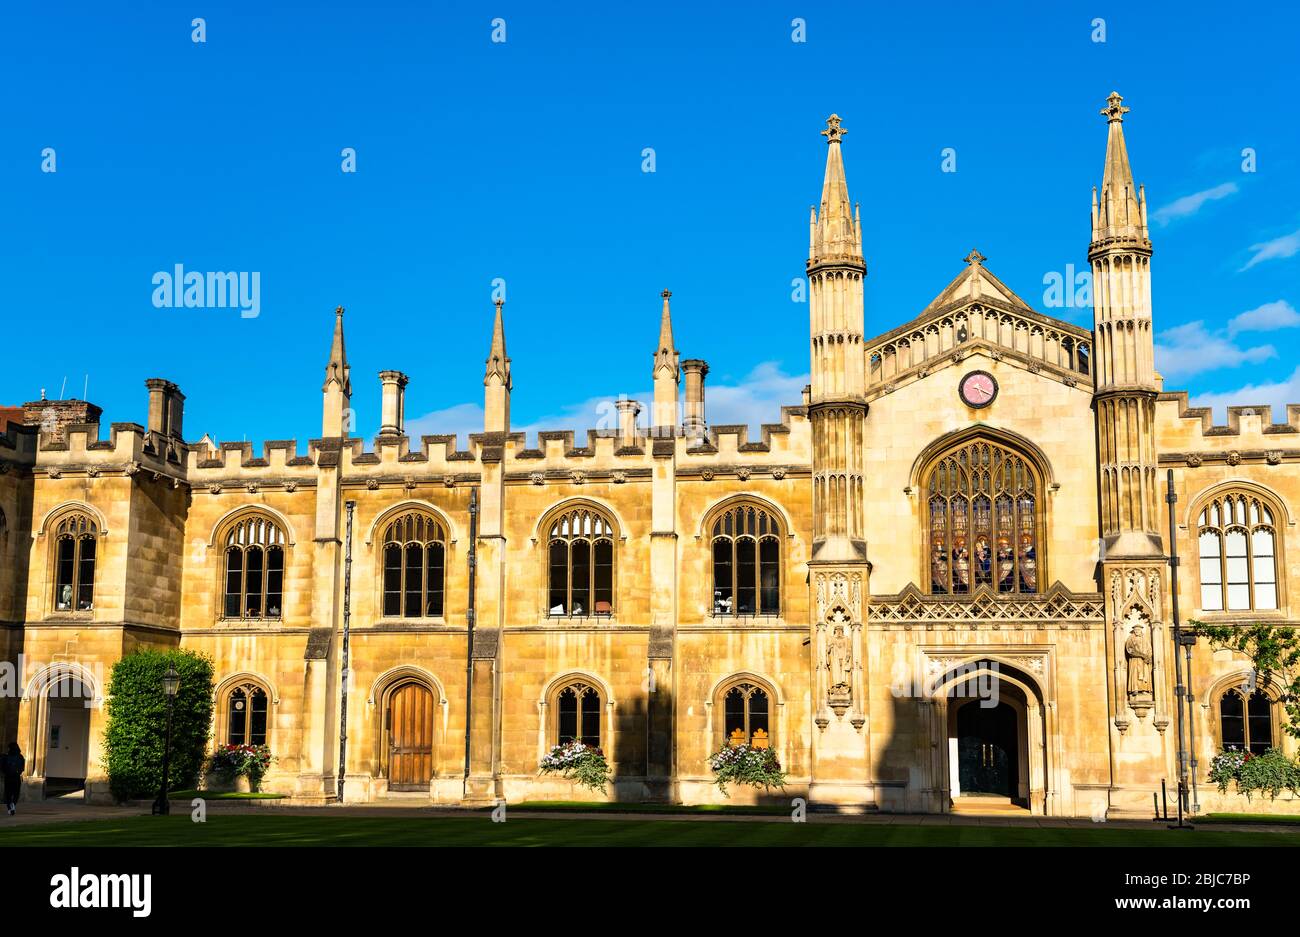 Corpus Christi College in Cambridge, UK Stockfoto